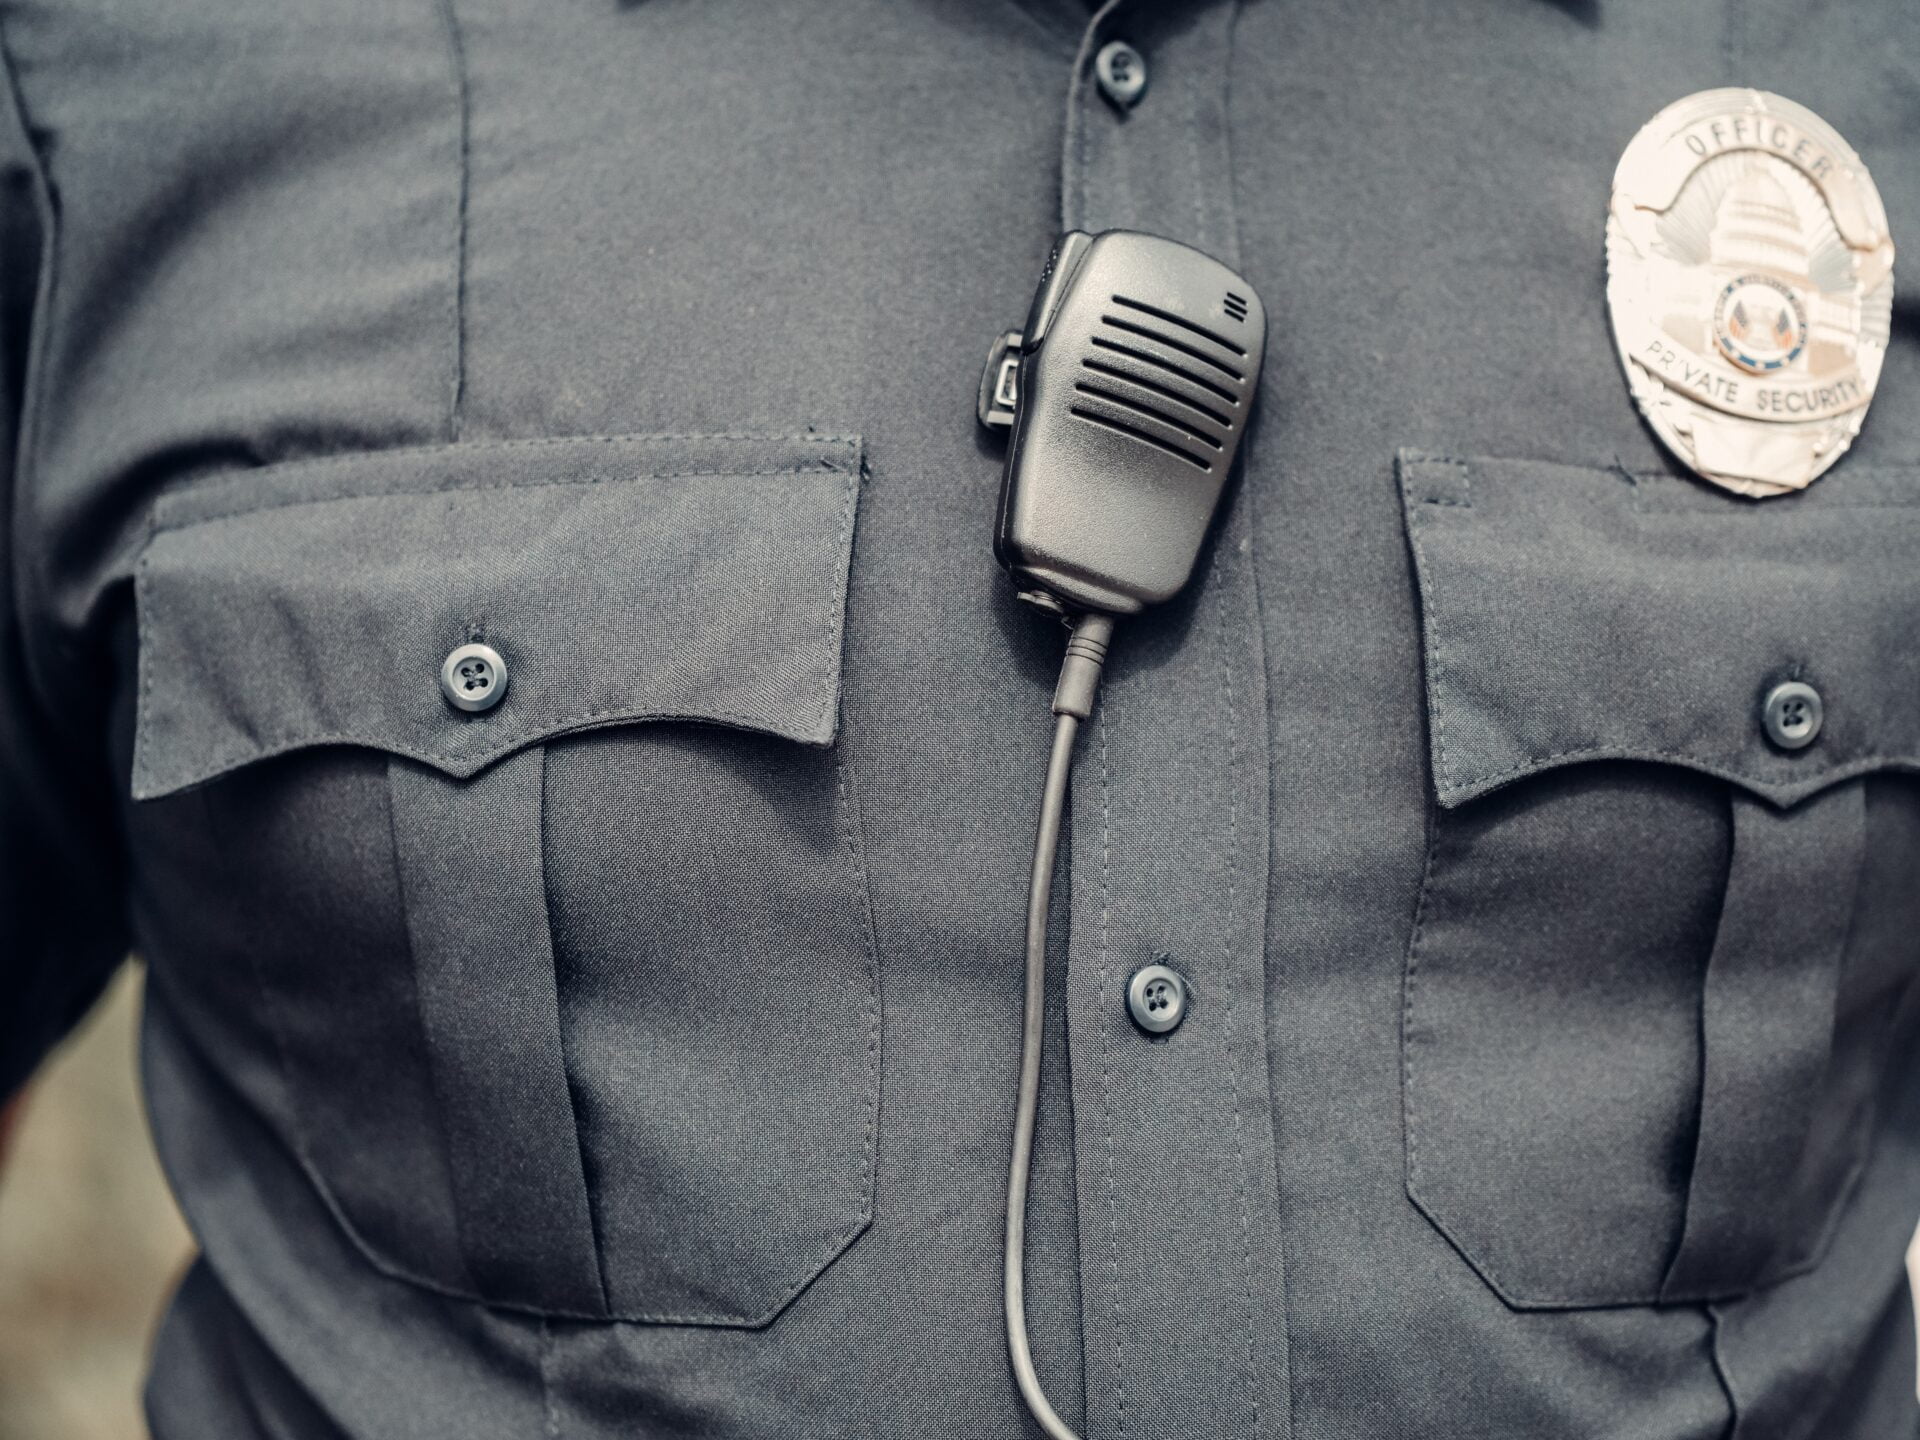 police badge and radio